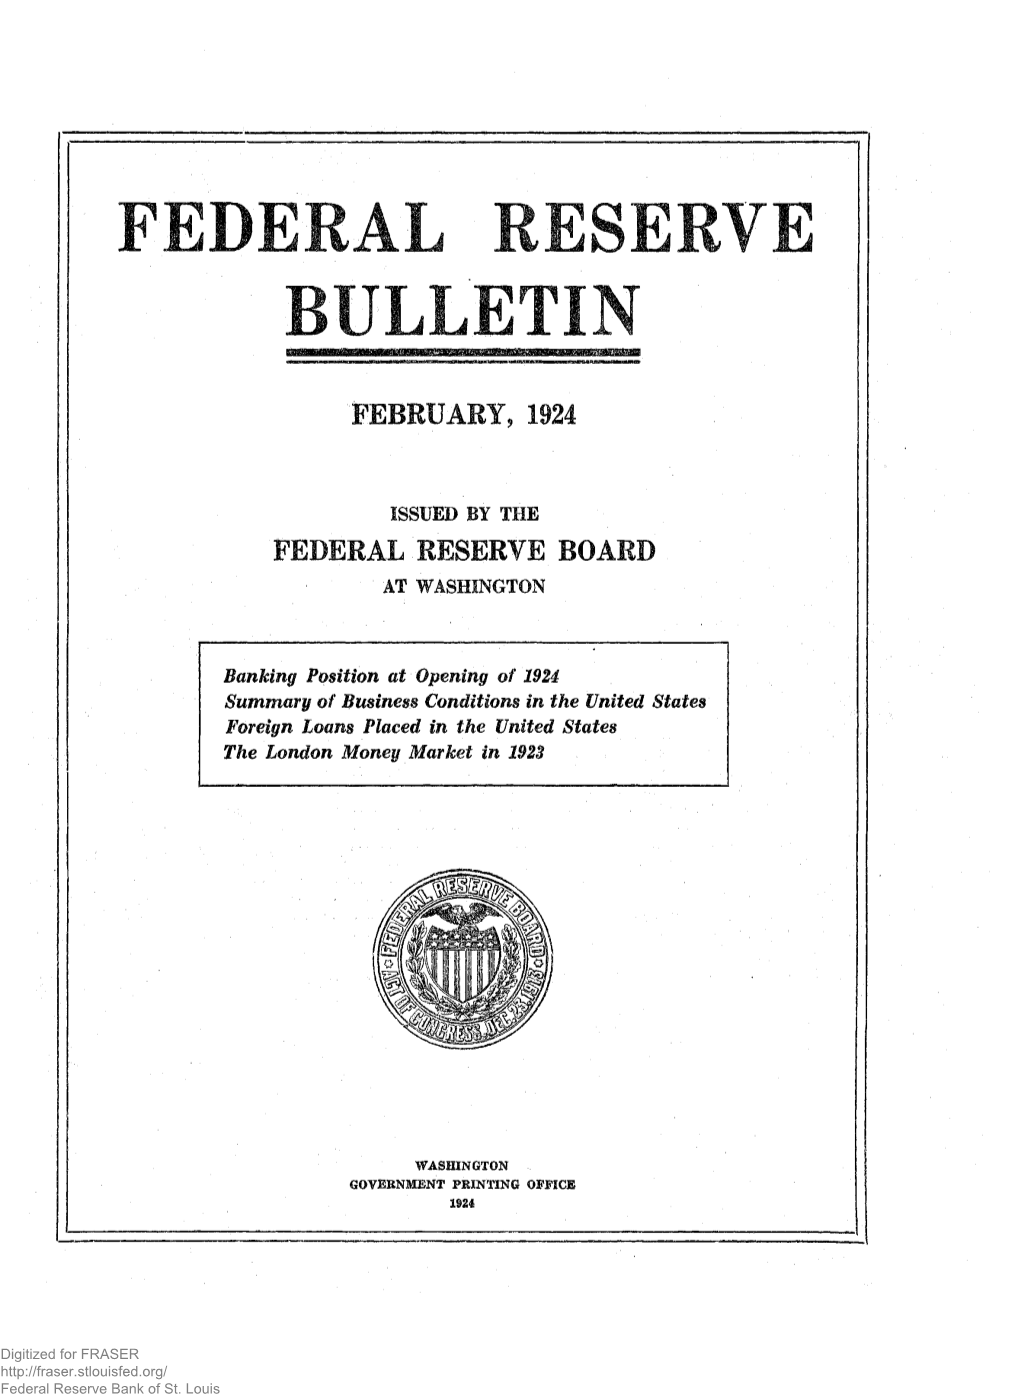 Federal Reserve Bulletin February 1924